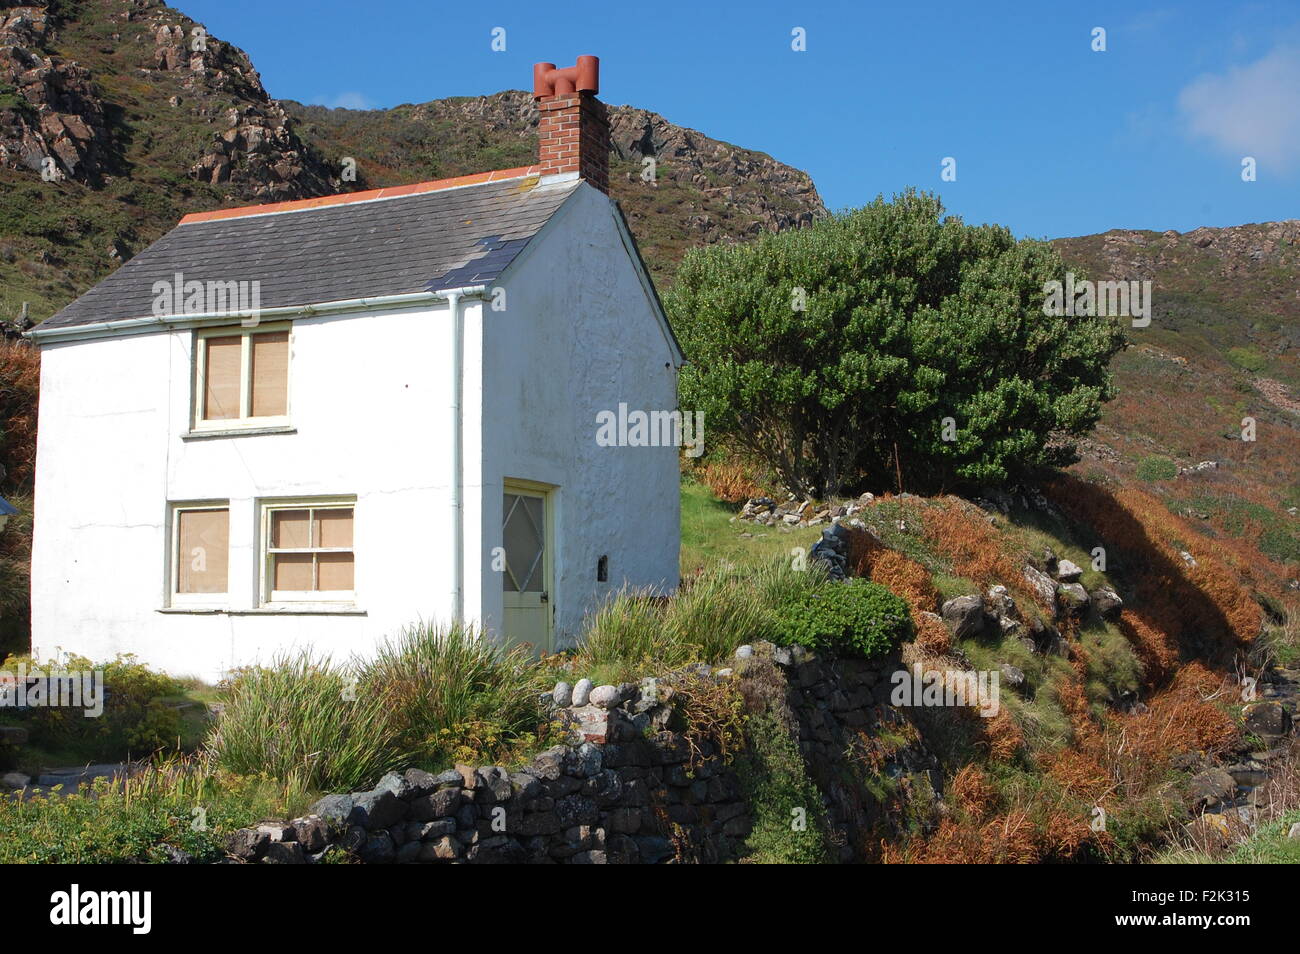 Single White Cornish Cottage Among A Mossy Hilly Landscape At